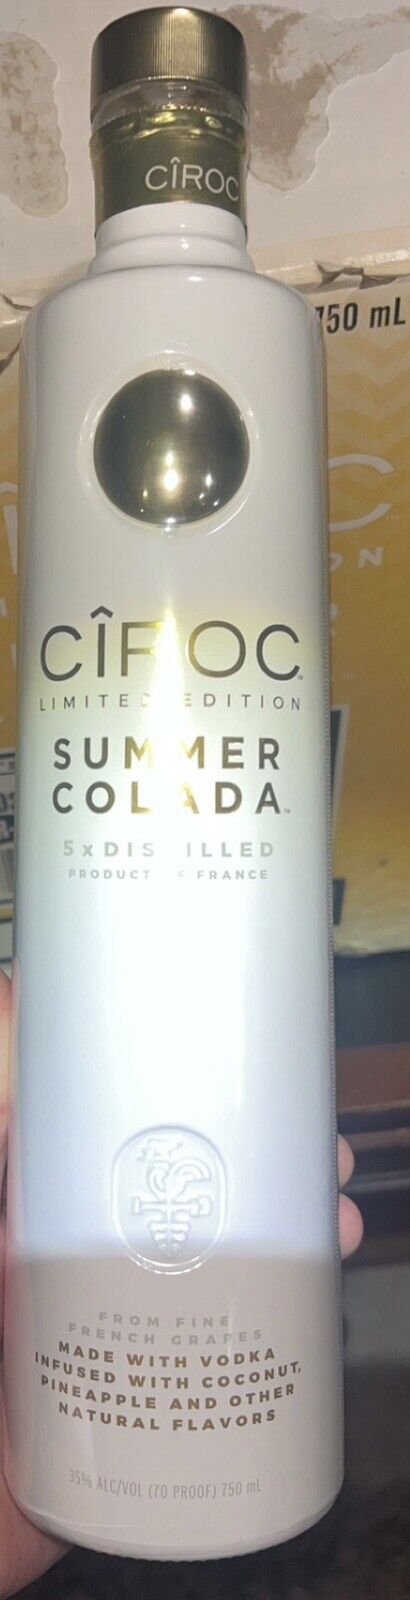 Ciroc Summer Colada Limited Edition Bottle EMPTY